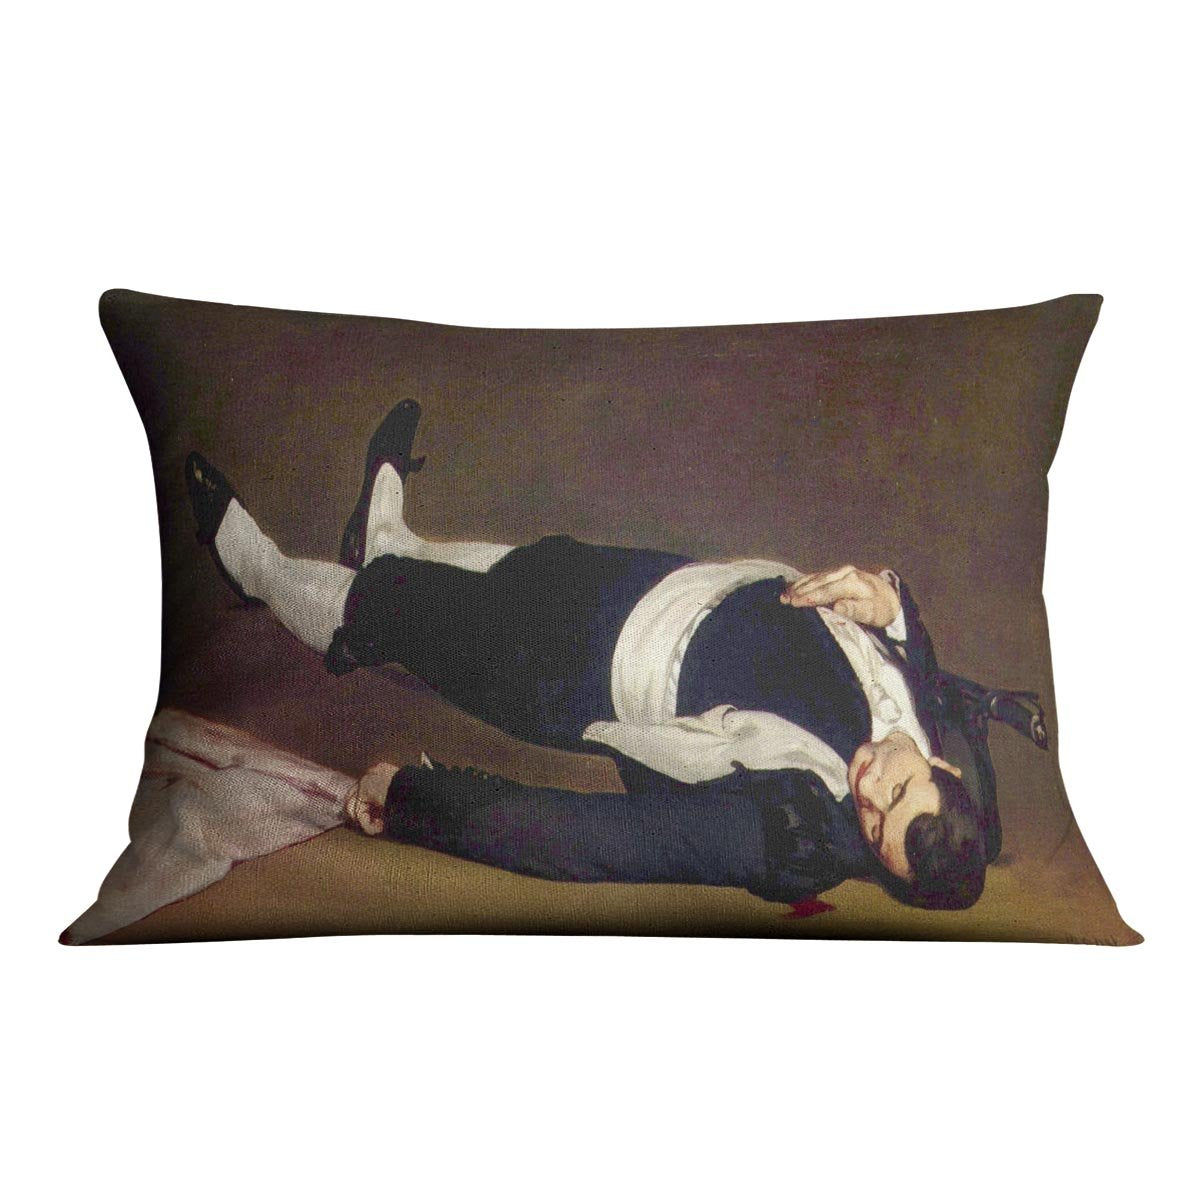 Dead Torero by Manet Throw Pillow